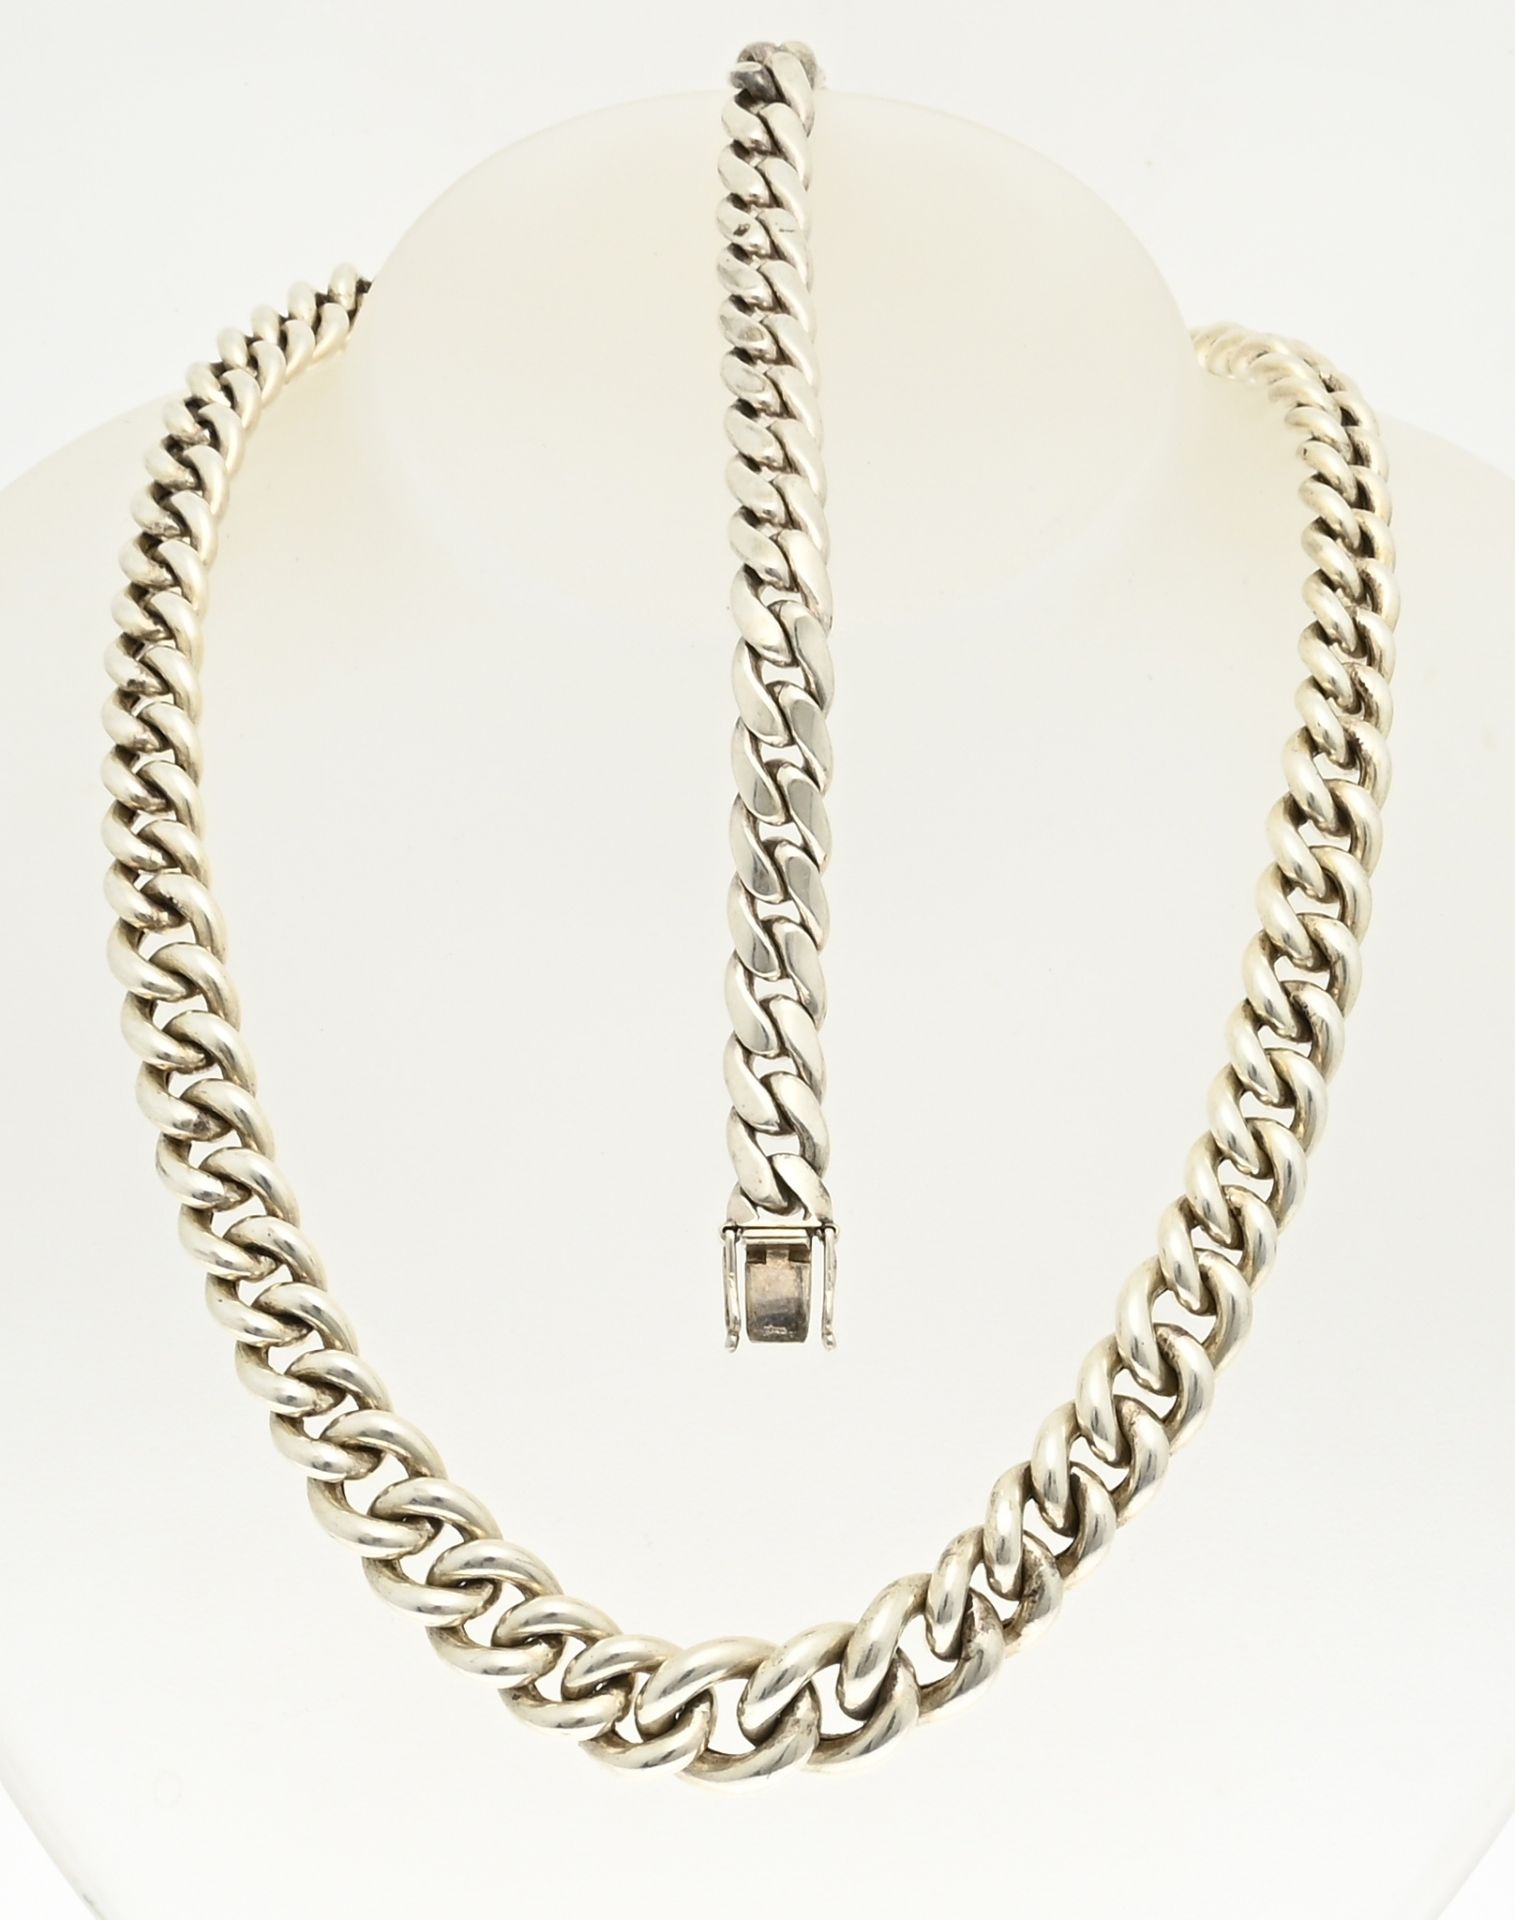 Silver necklace and bracelet